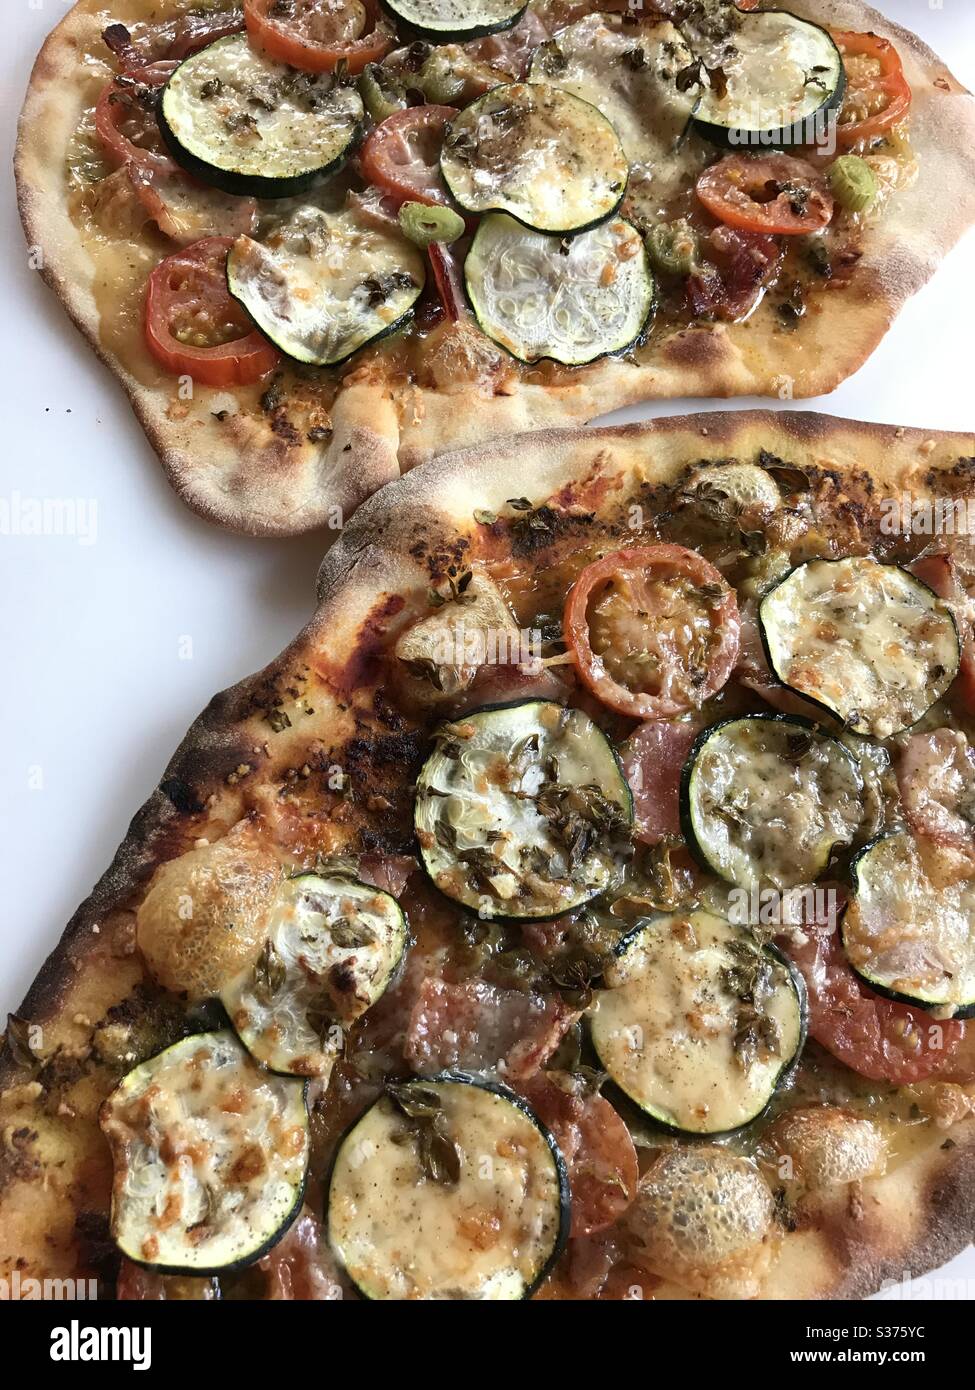 Sourdough pizzas with vegetables Stock Photo